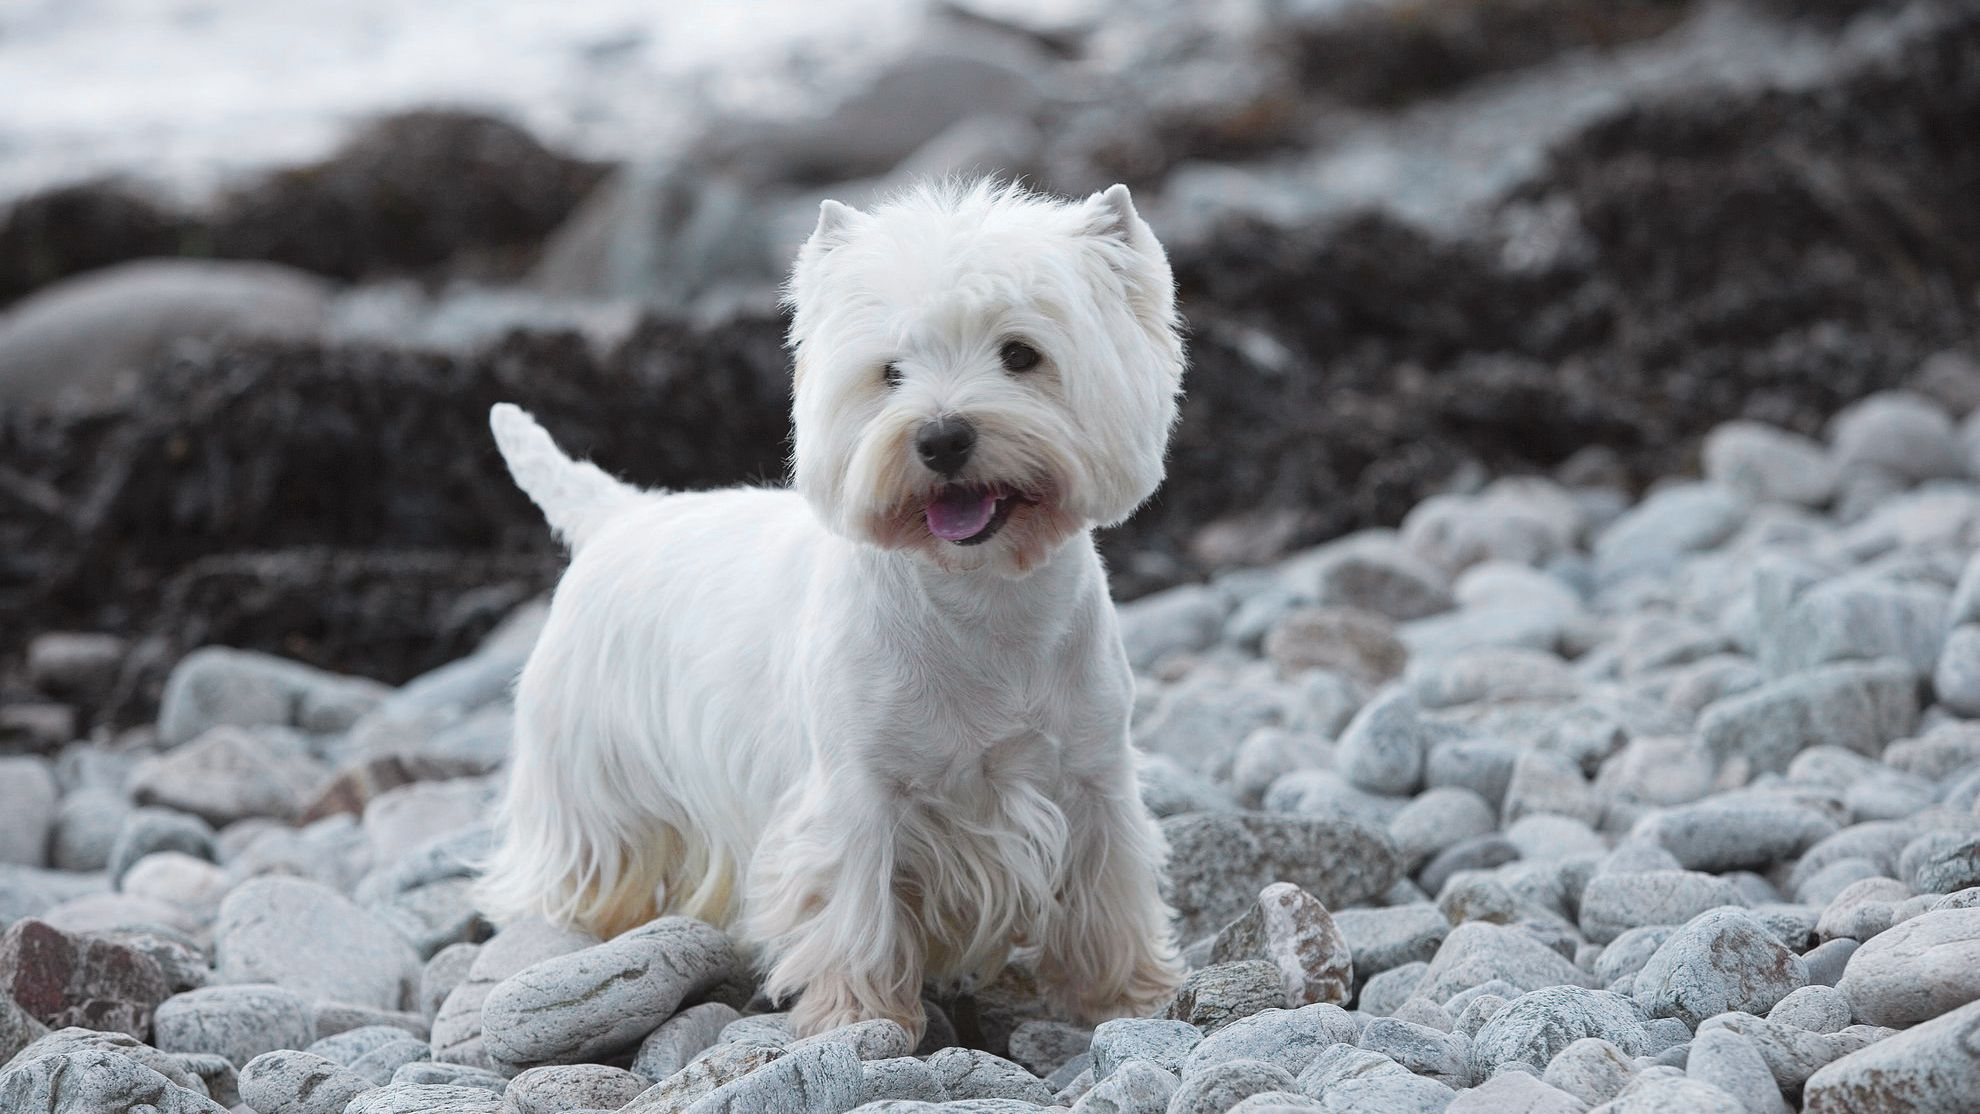 West Highland White Terrier standing on rocky terrain